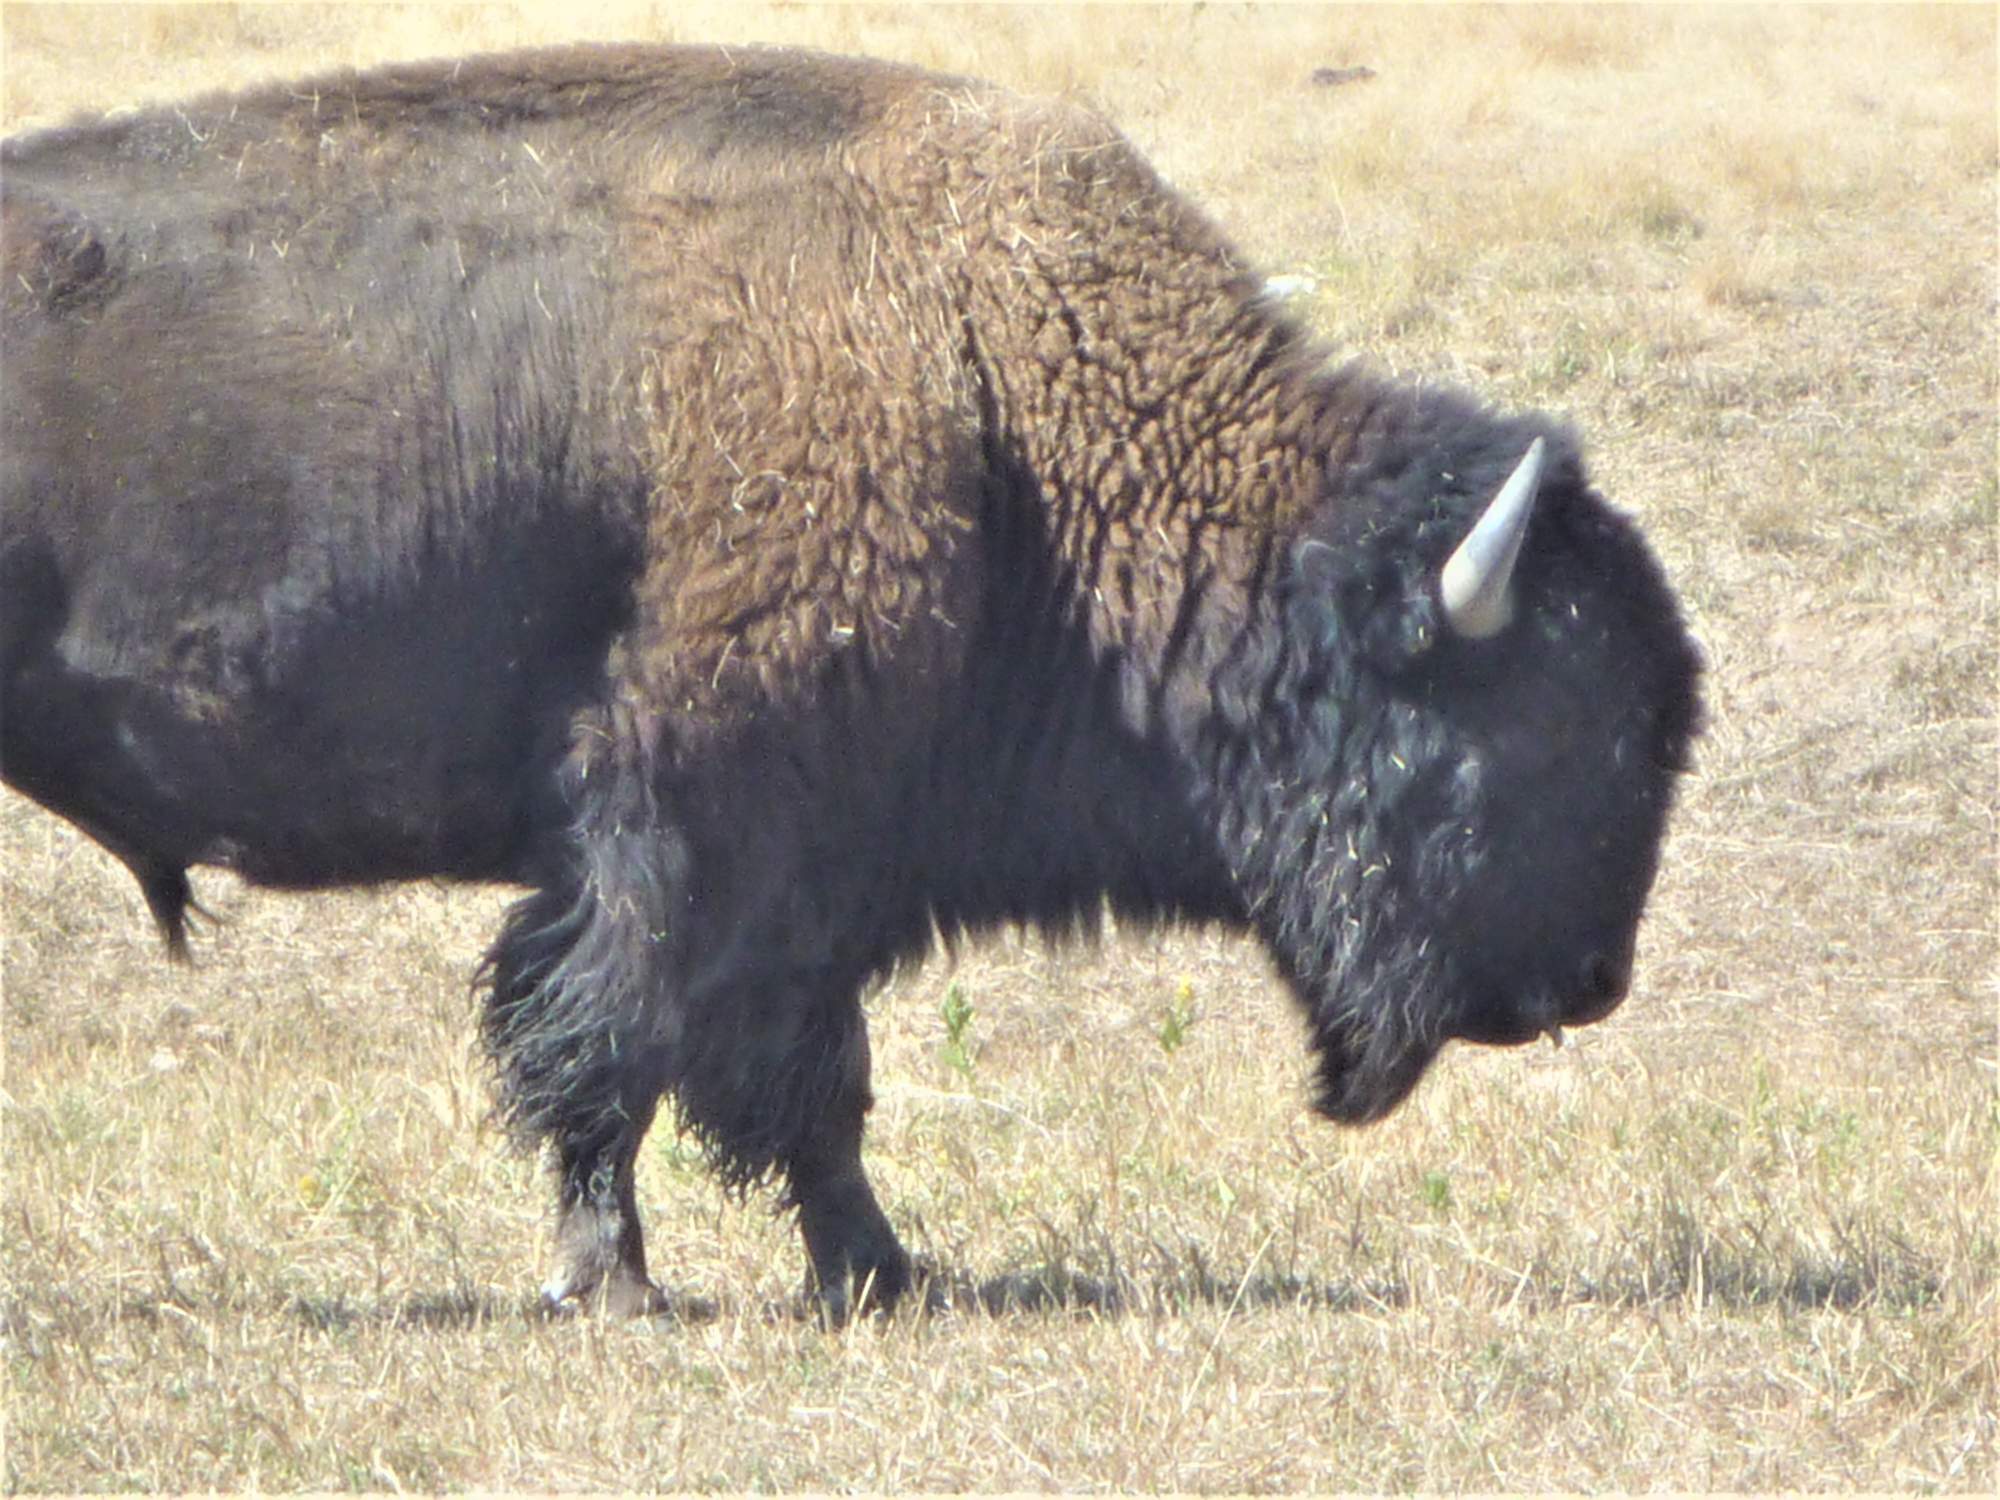 Annual Buffalo Roundup